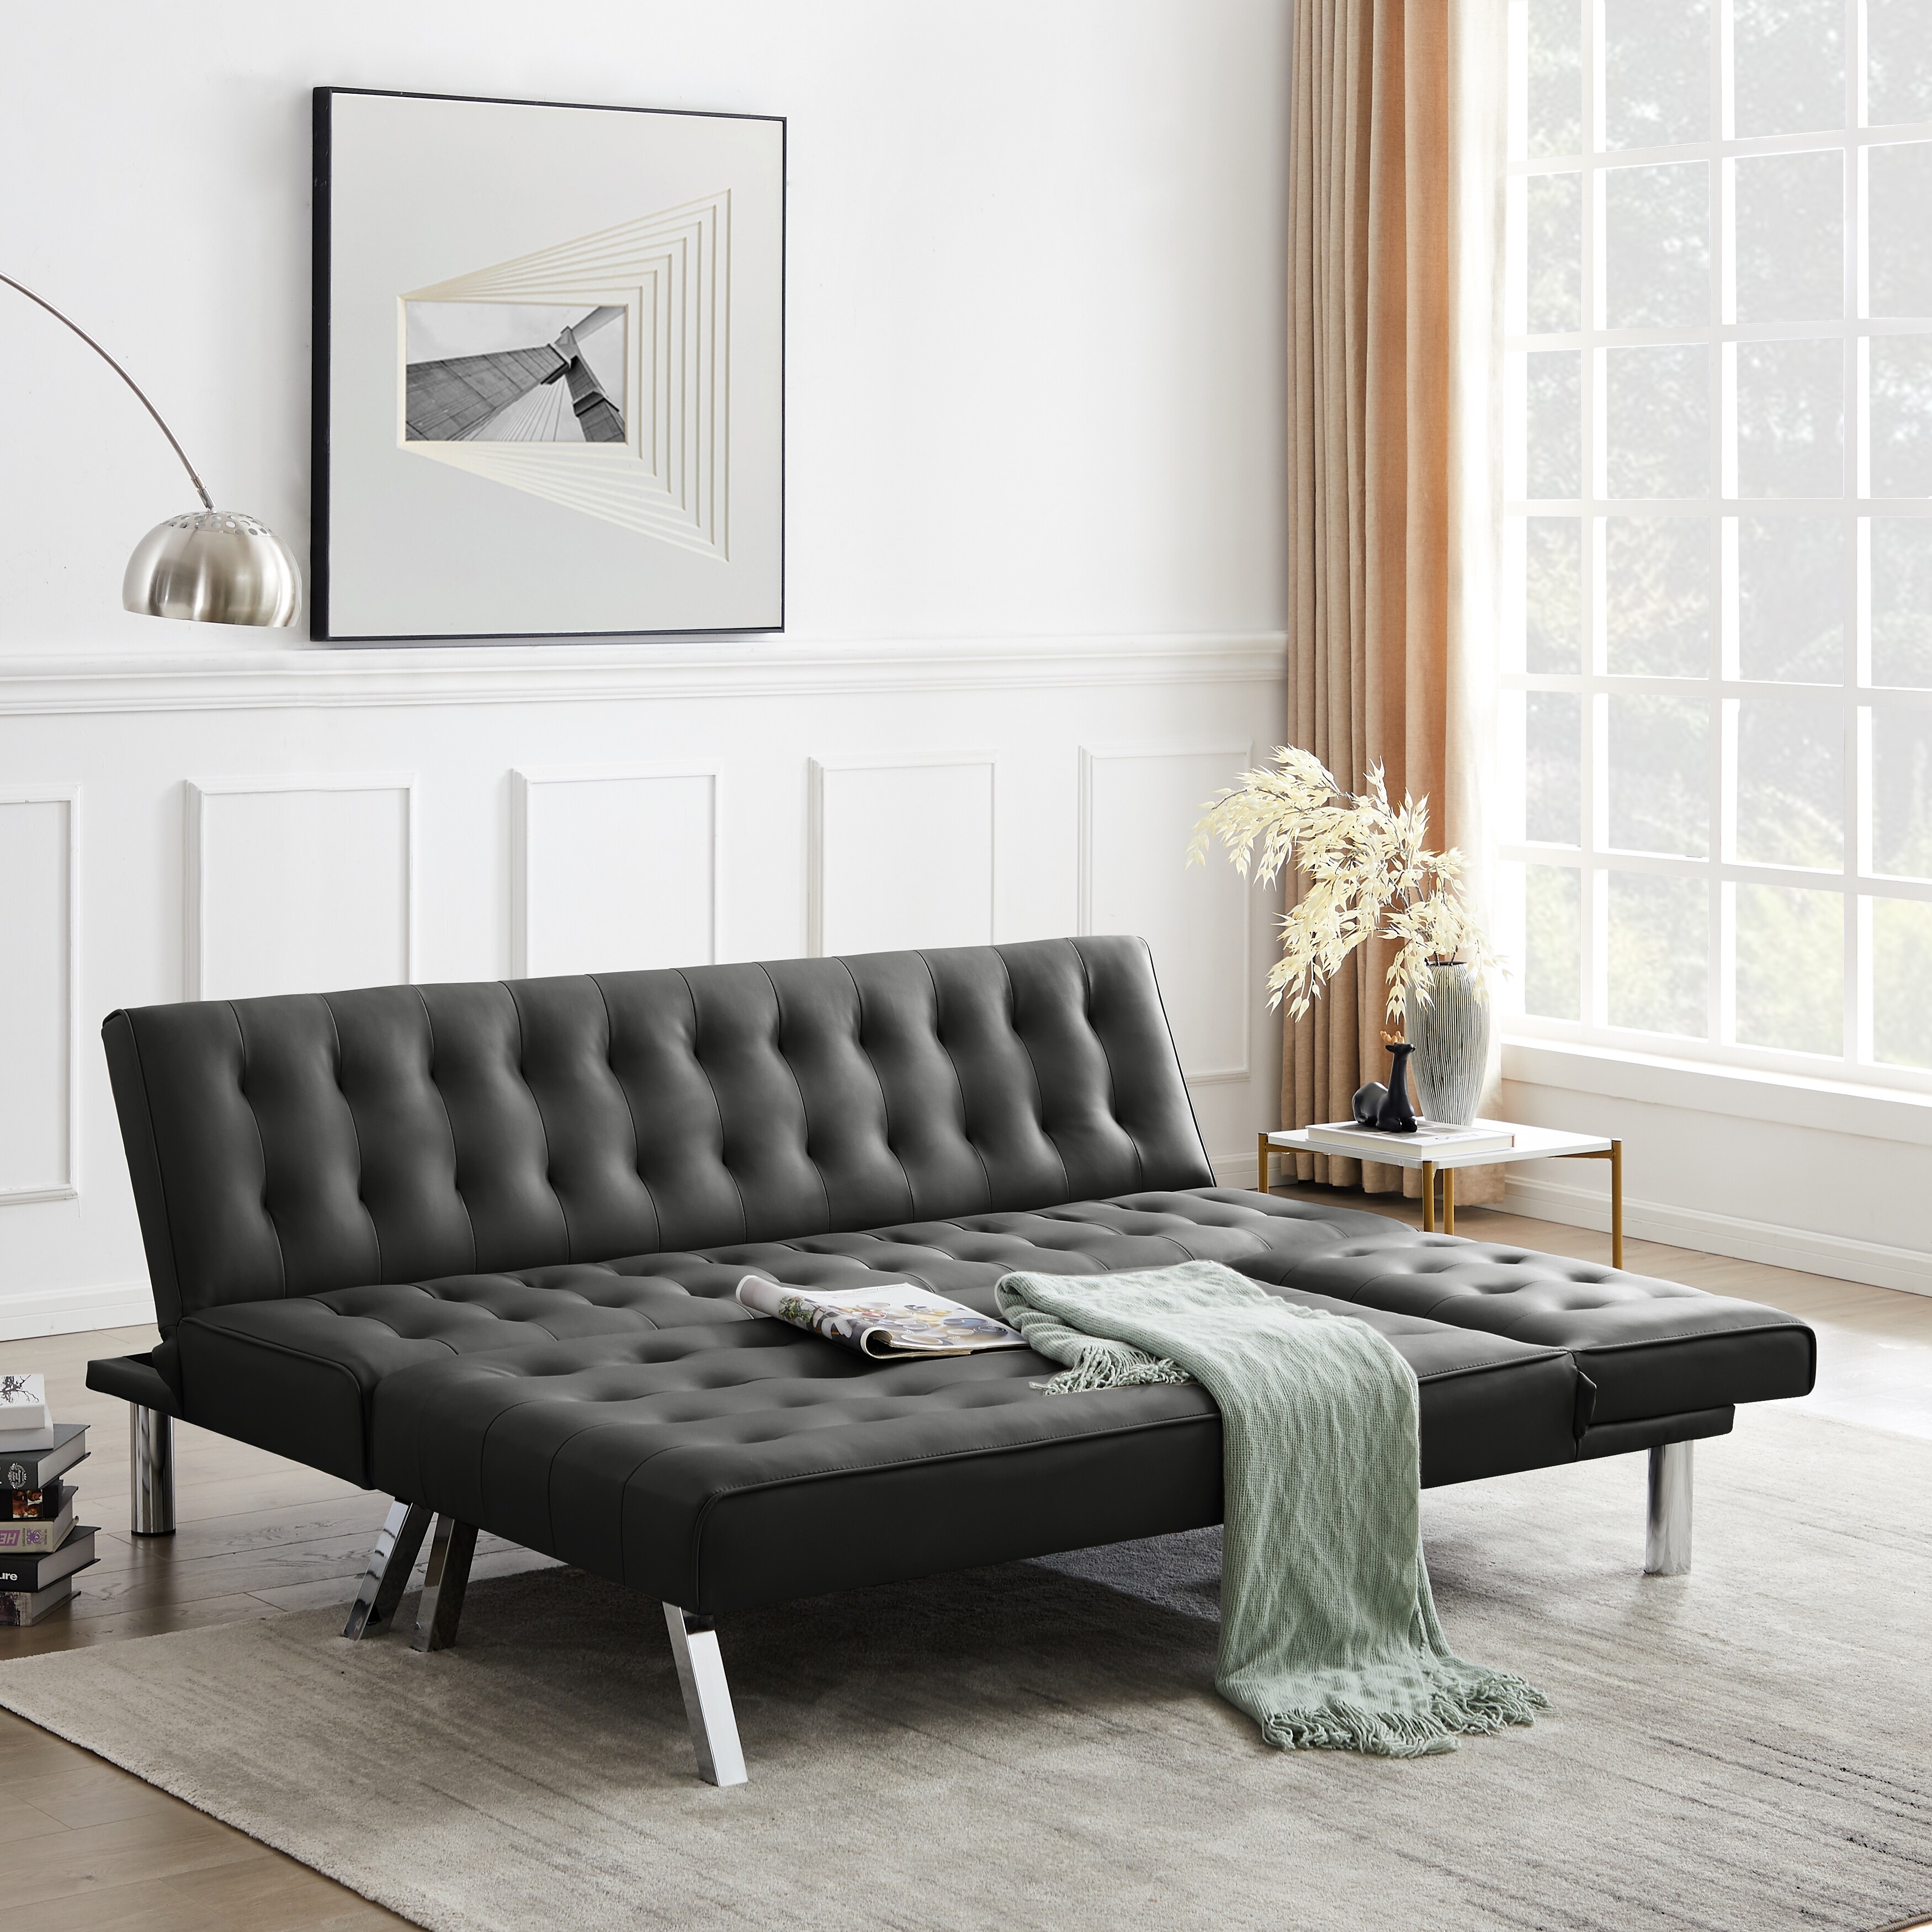 TiramisuBest Large L-Shape Reversible Armless PU Leather Sleeper Sofa Bed, Black